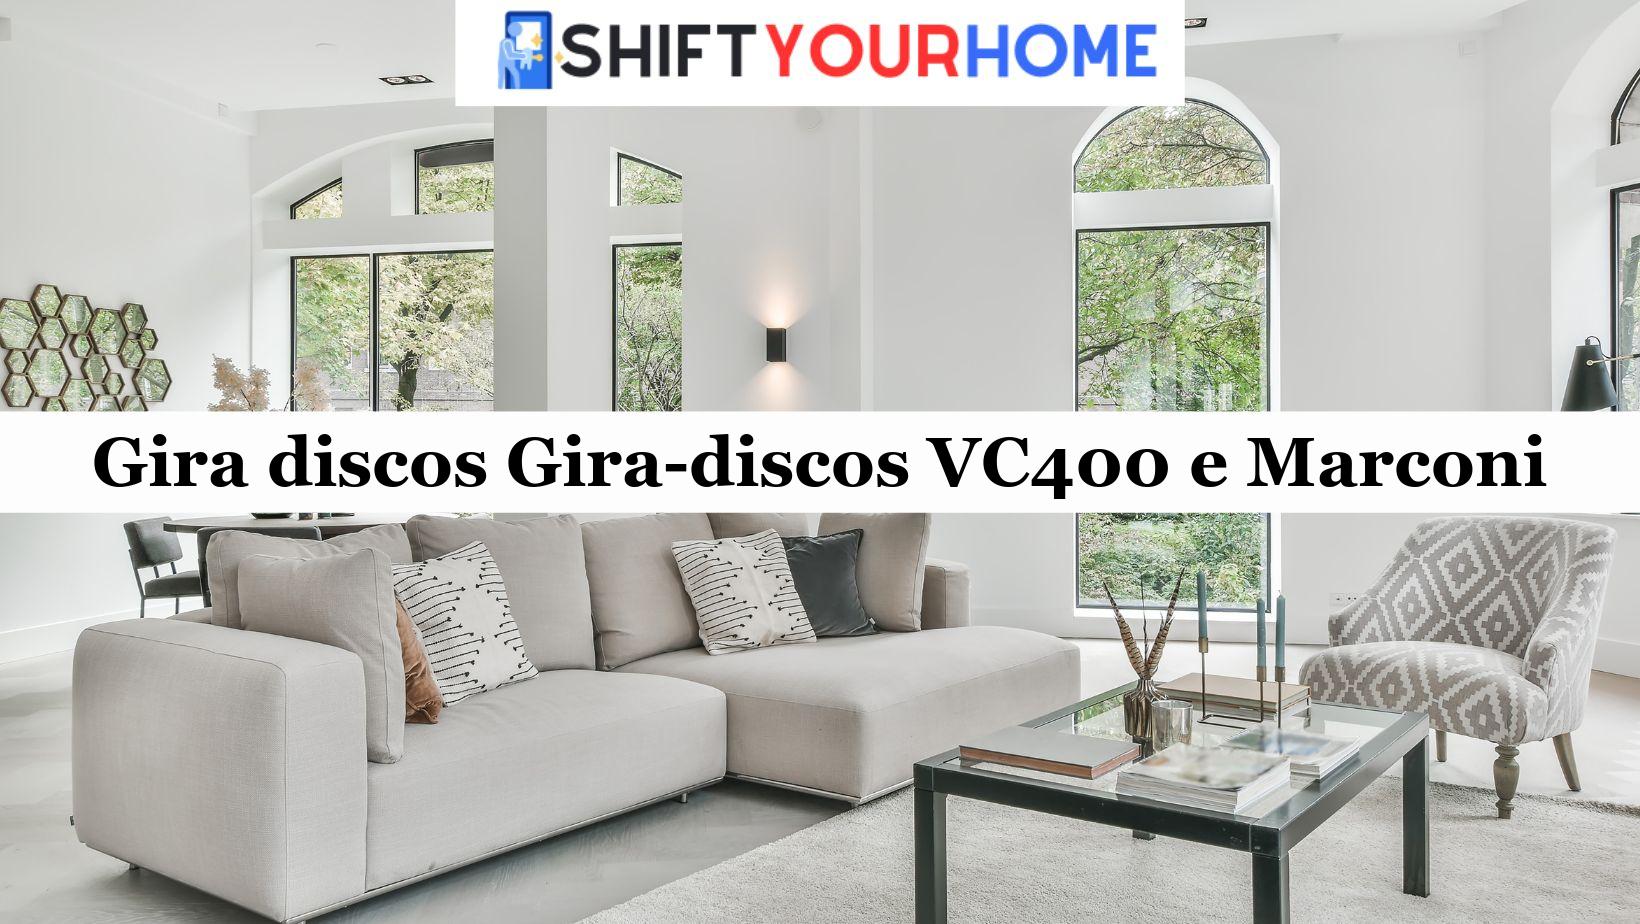 Gira discos Gira-discos VC400 e Marconi: Análise Completa